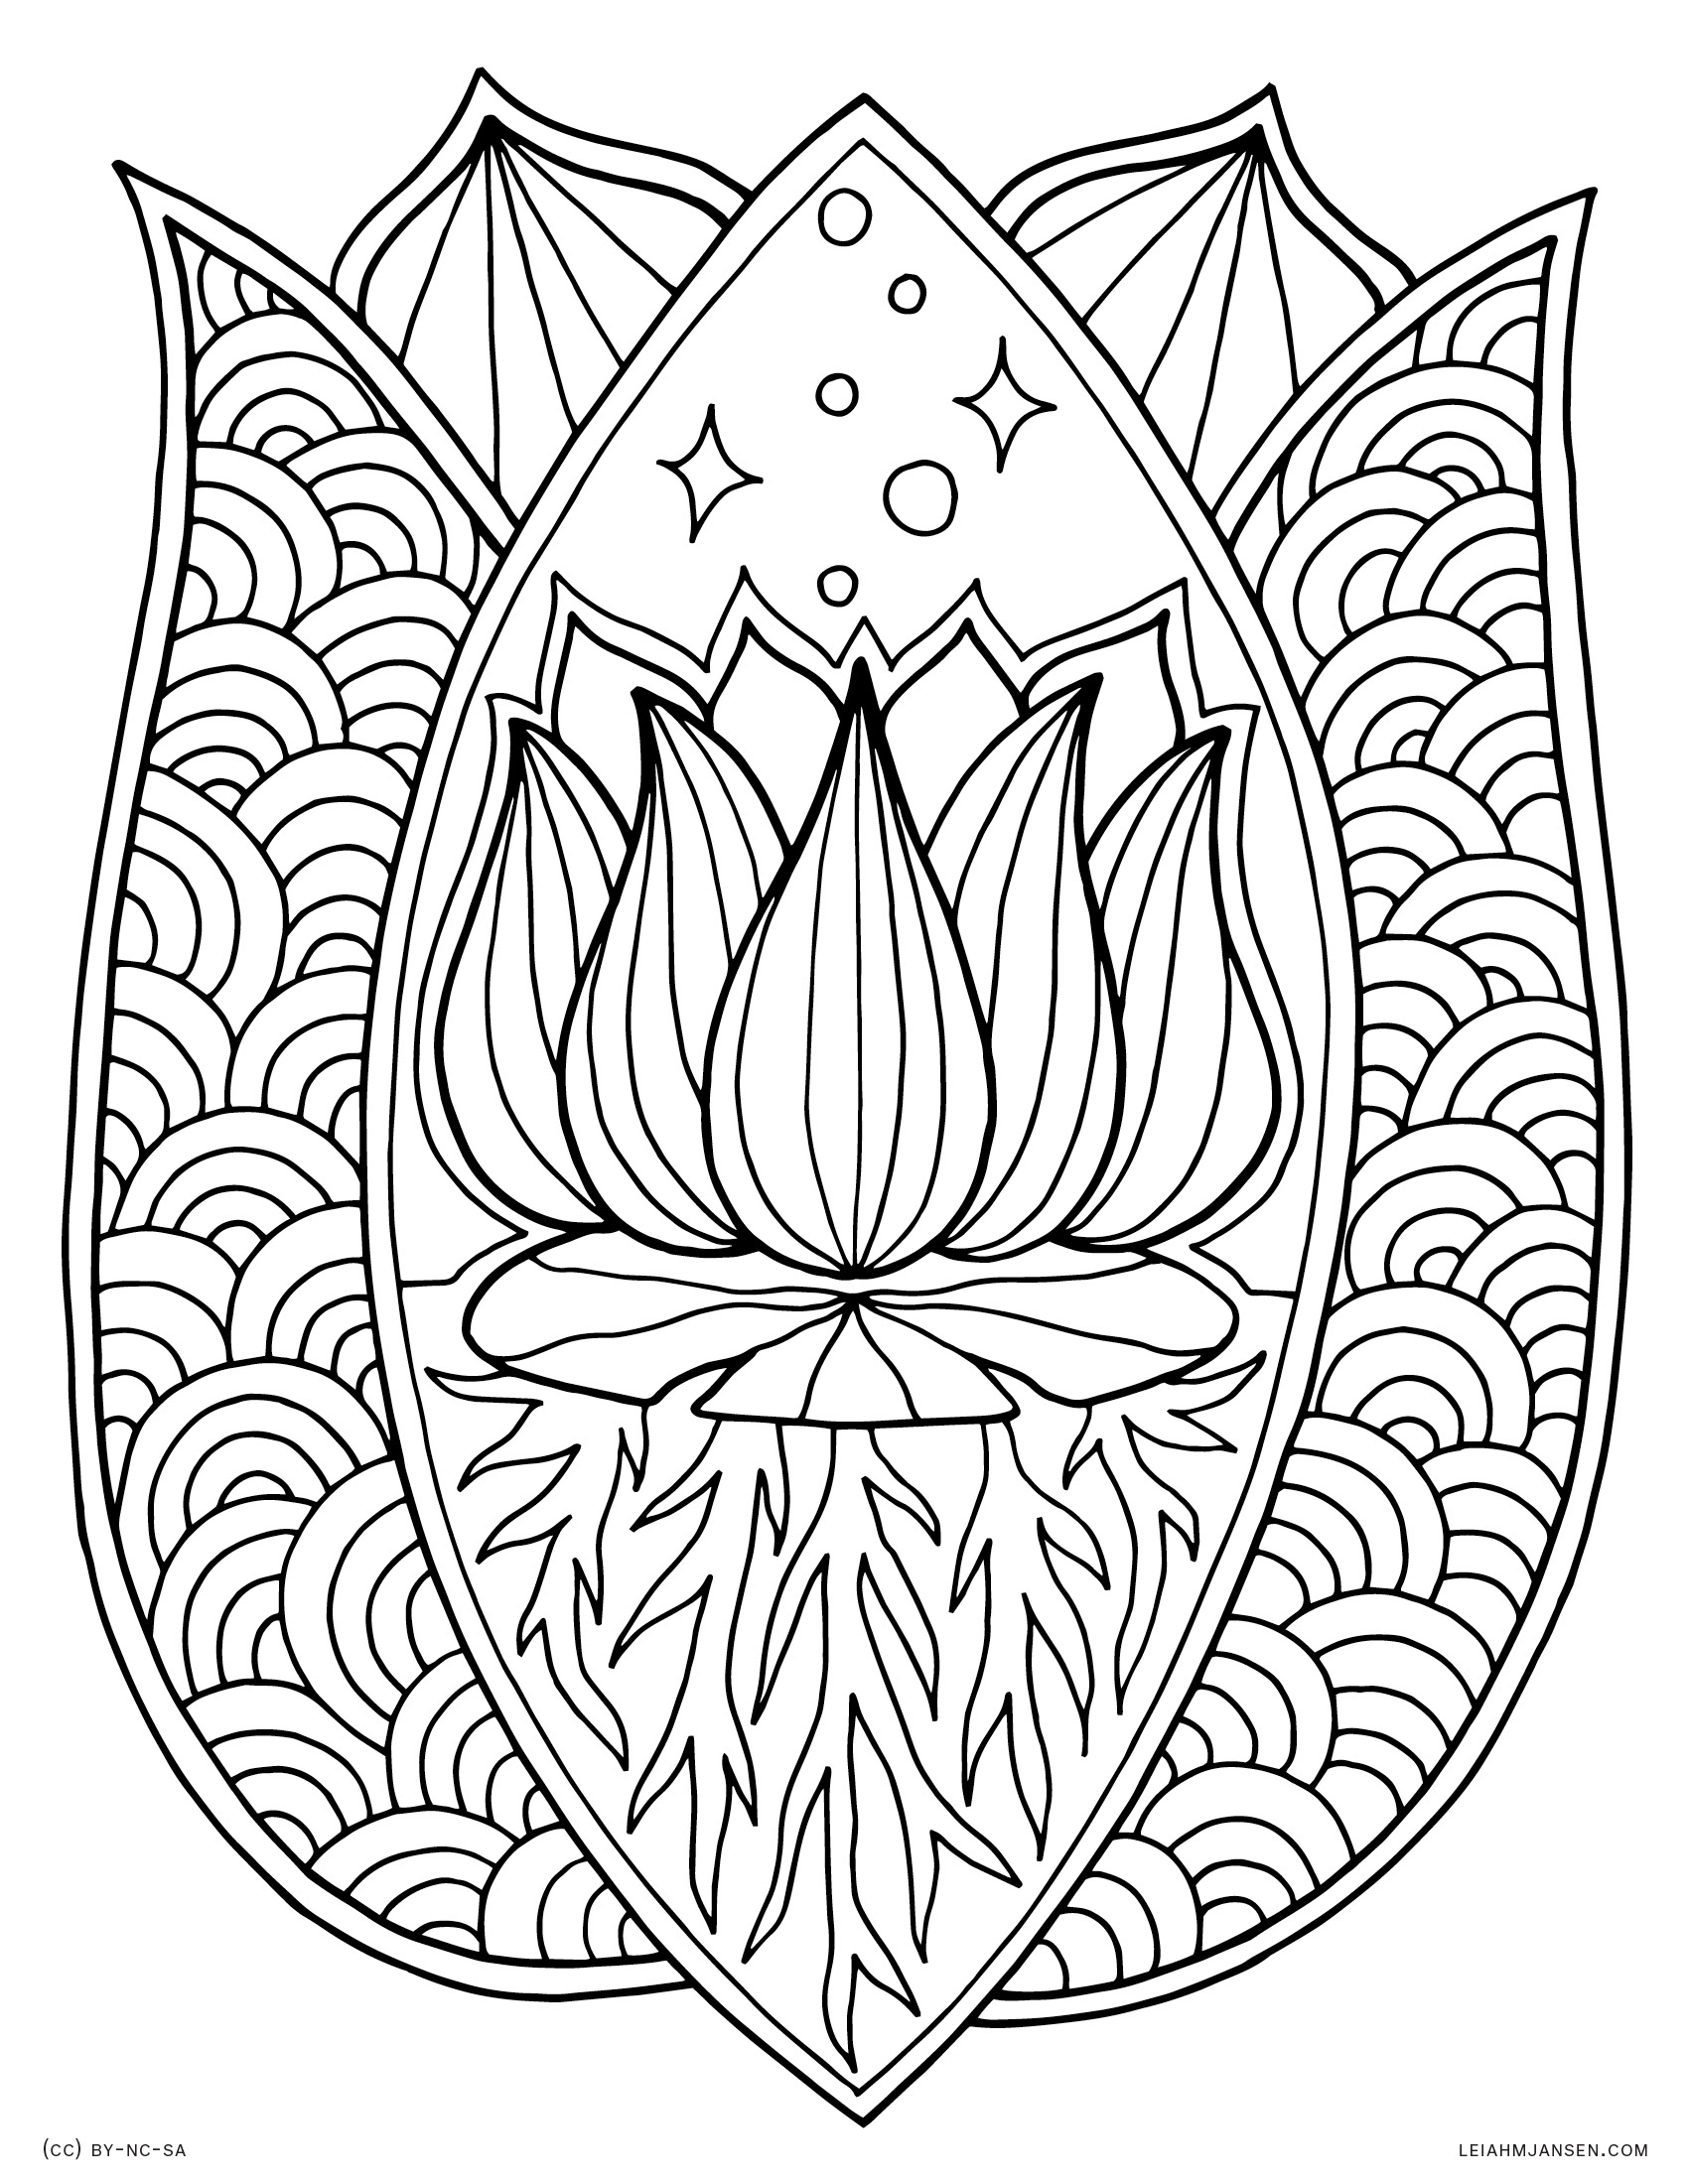 Free Printable Flower Mandala Coloring Pages at GetColorings.com | Free